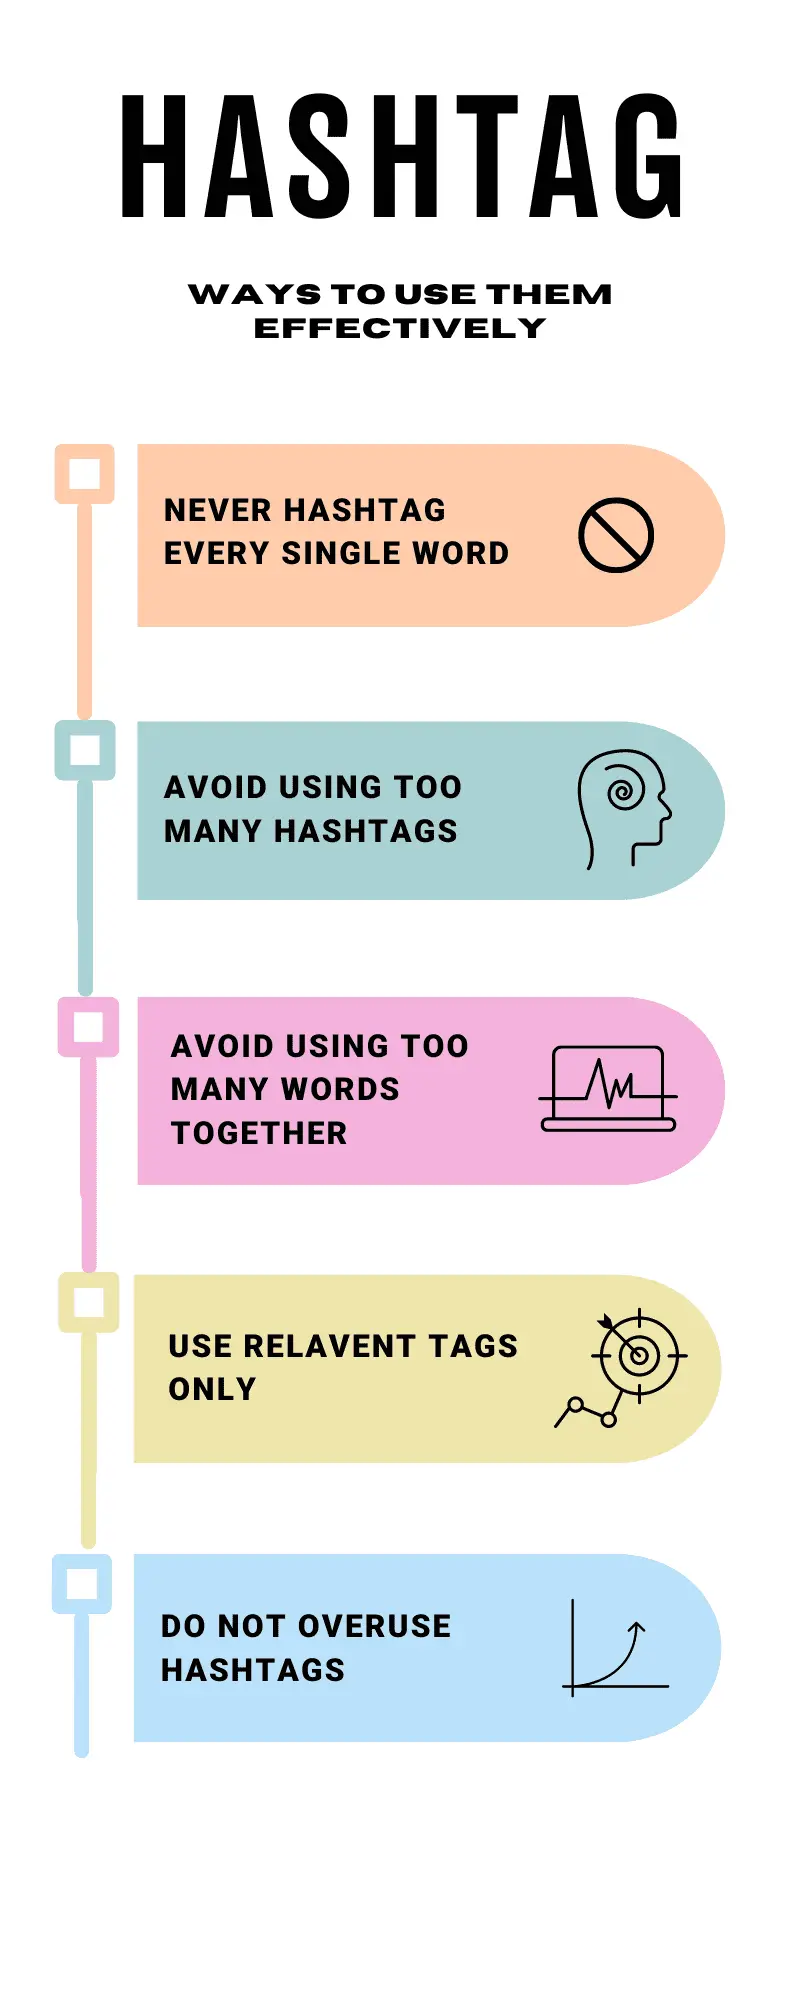 Ways to use hashtags effectively